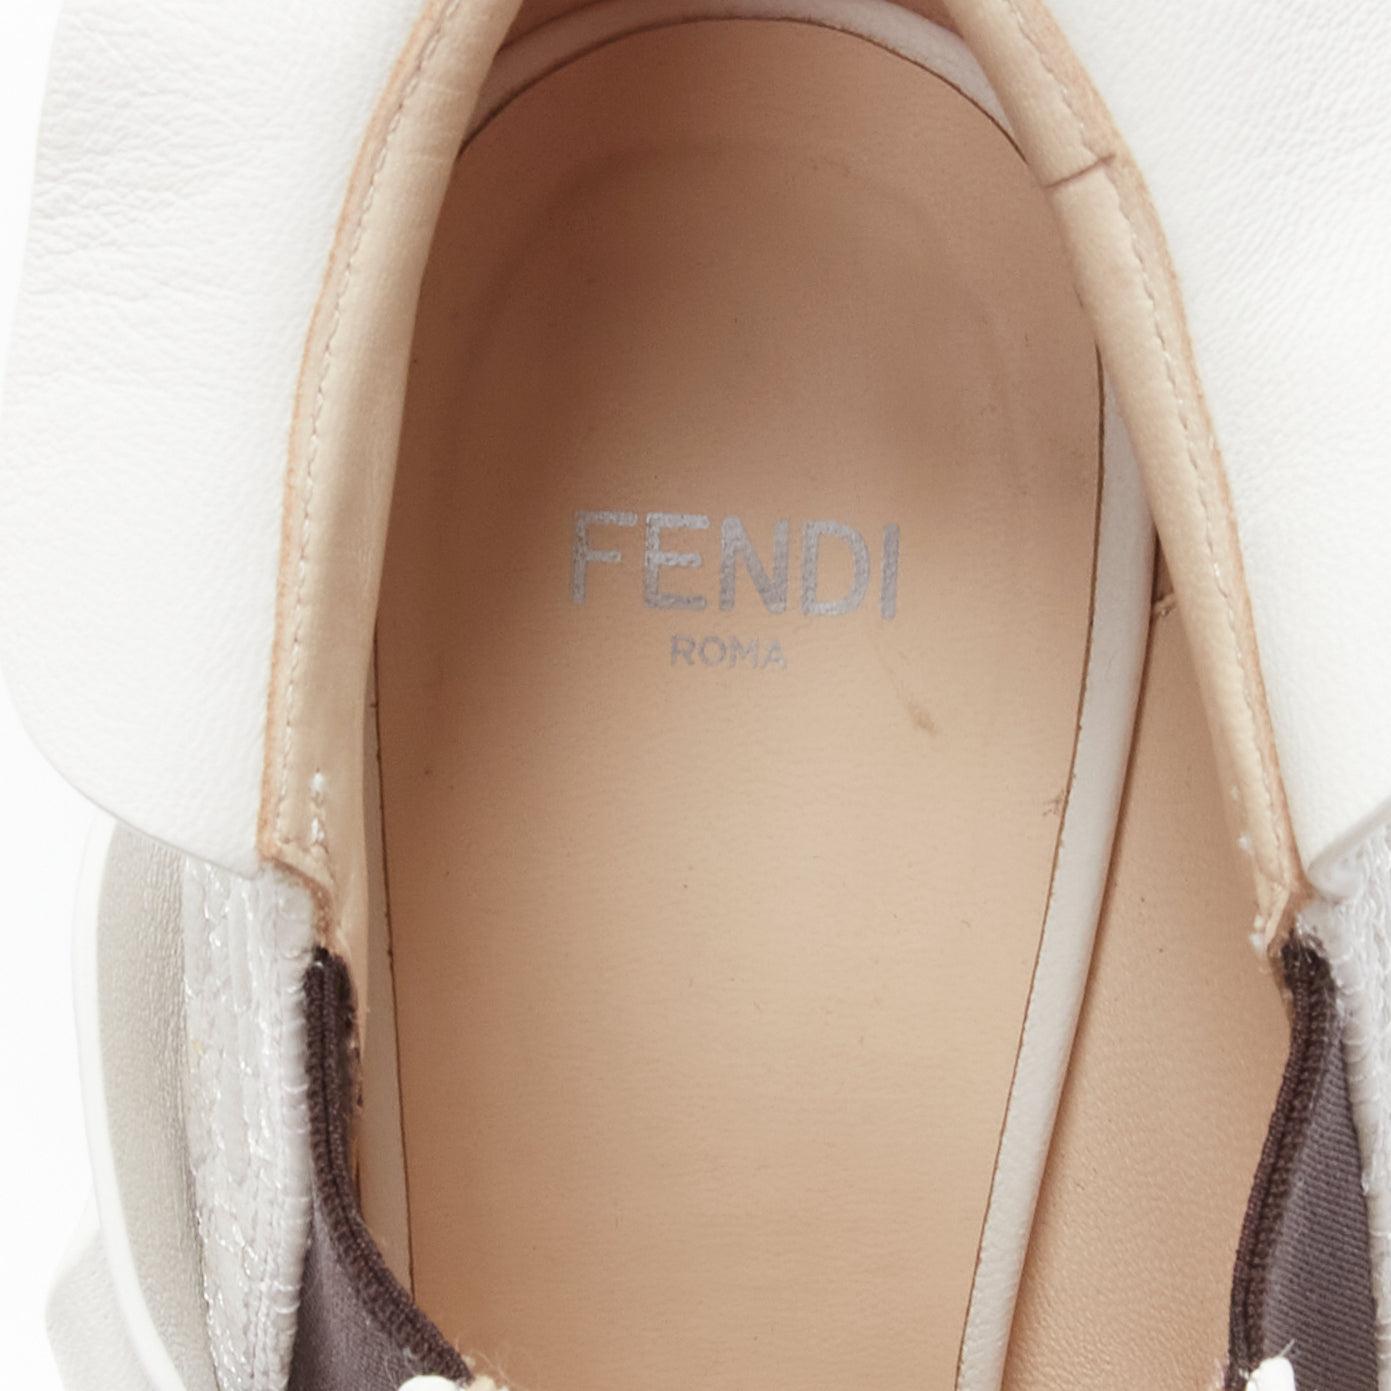 FENDI Runway white textured leather ruffle tiered cone heels booties EU38 5